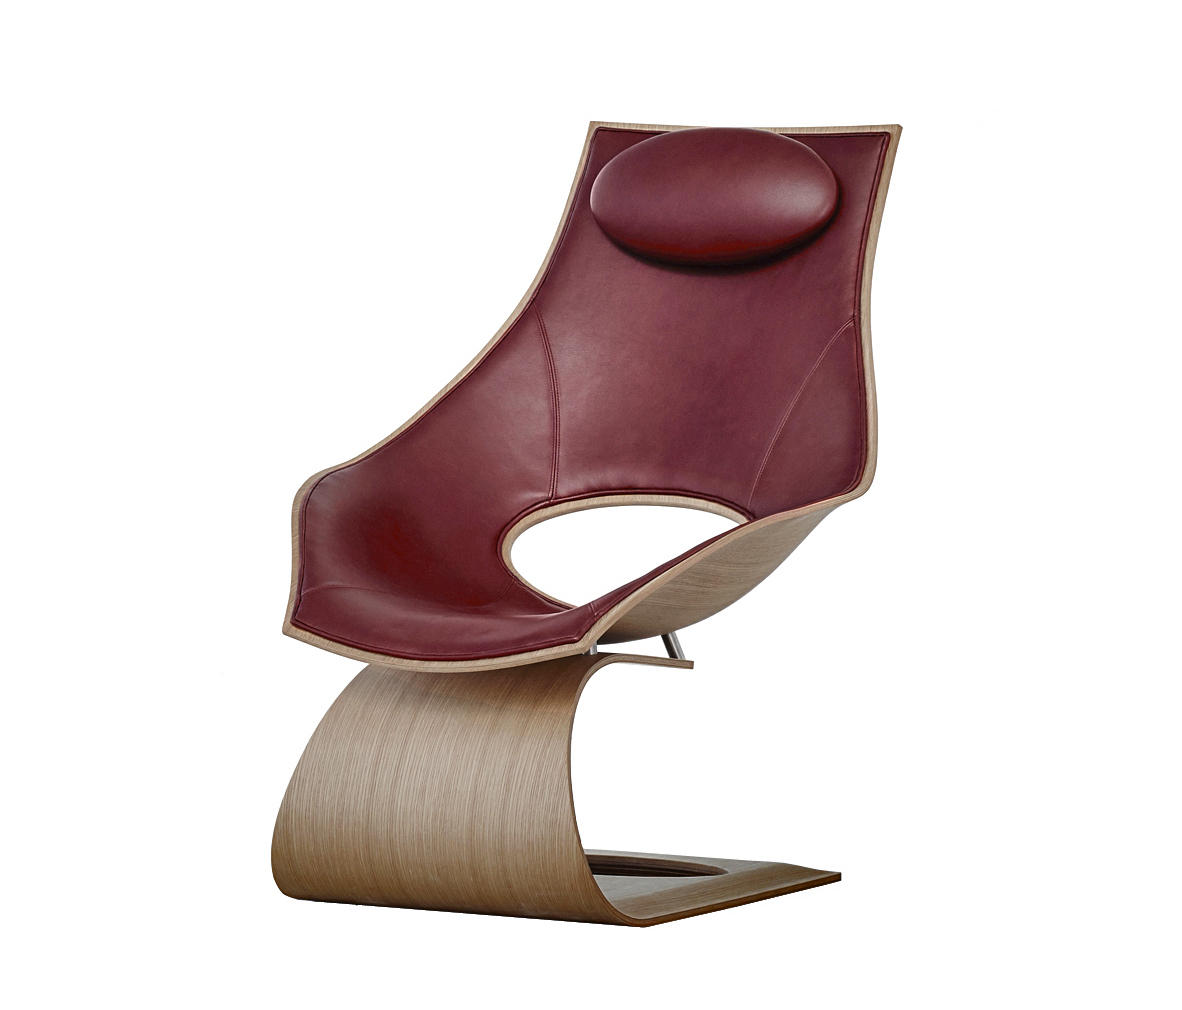 TA001 DREAM CHAIR - Lounge chairs from Carl Hansen & Søn | Architonic